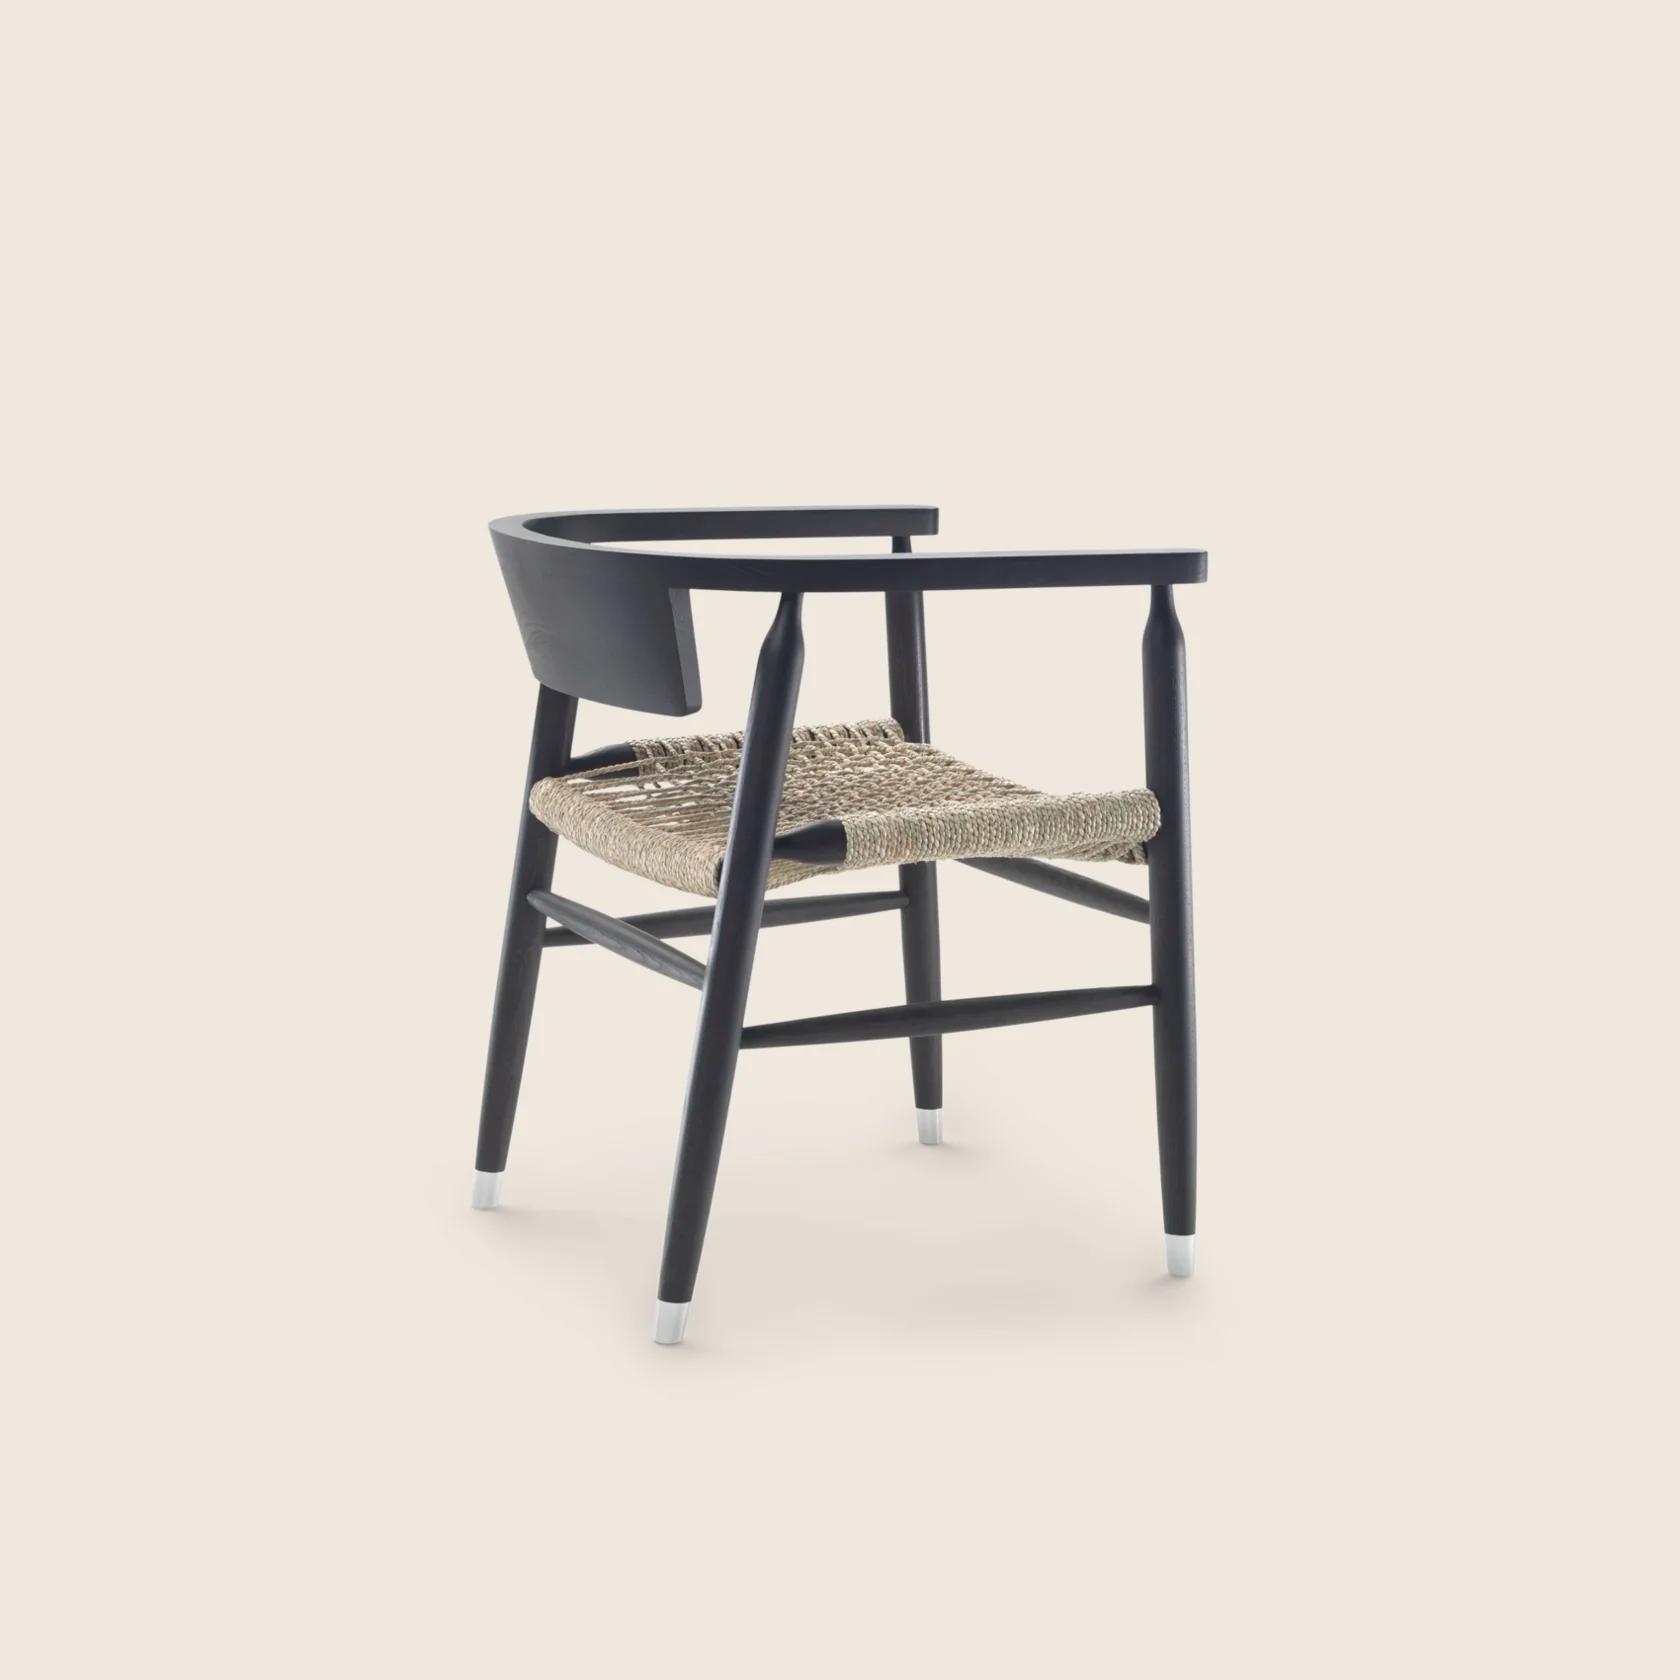 DORIS | DORIS S.H. Dining chairs/Chairs | Design Made in Italy - Flexform